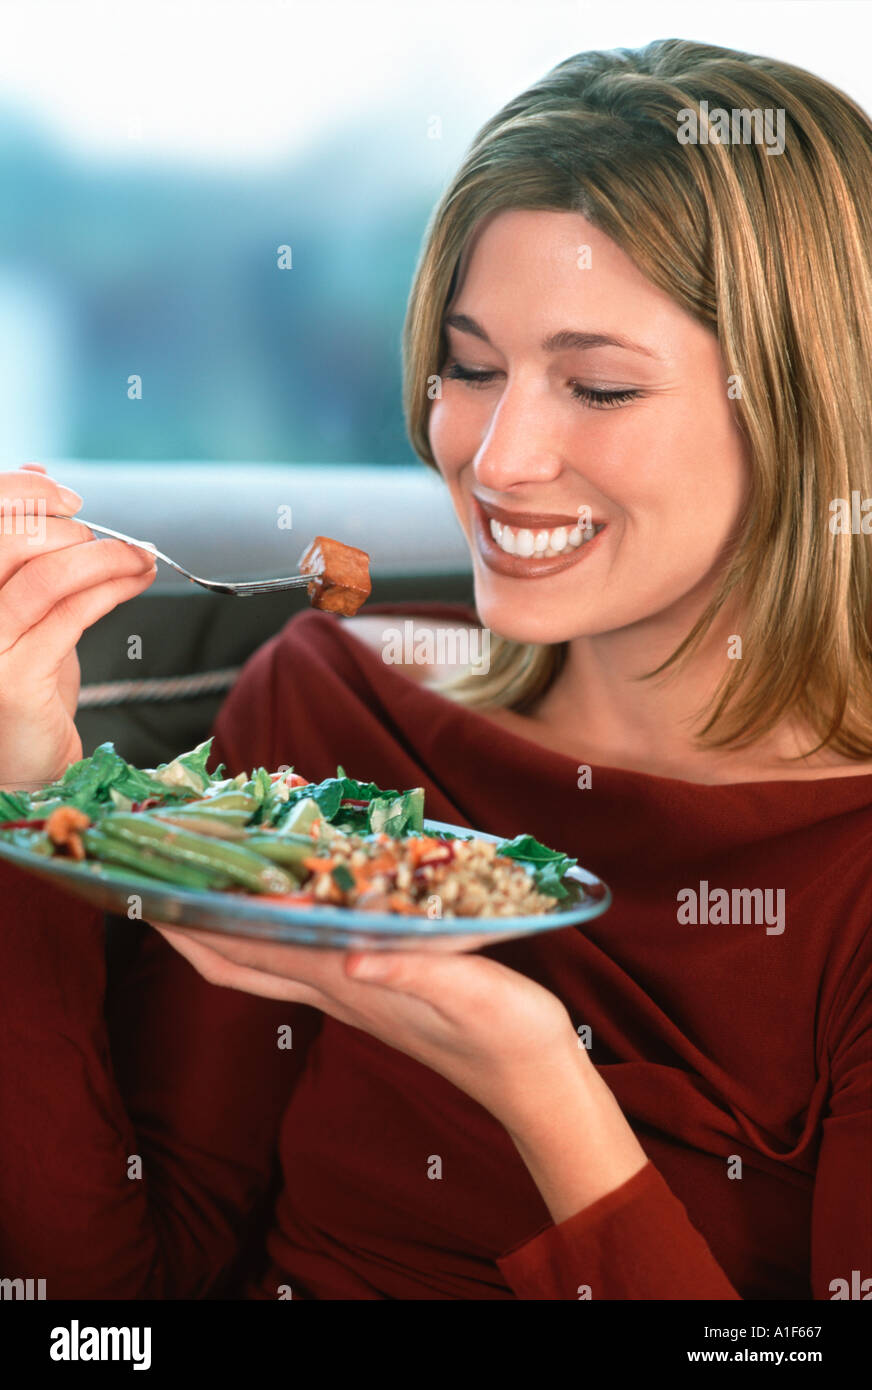 Happy woman eating healthy salad Stock Photo